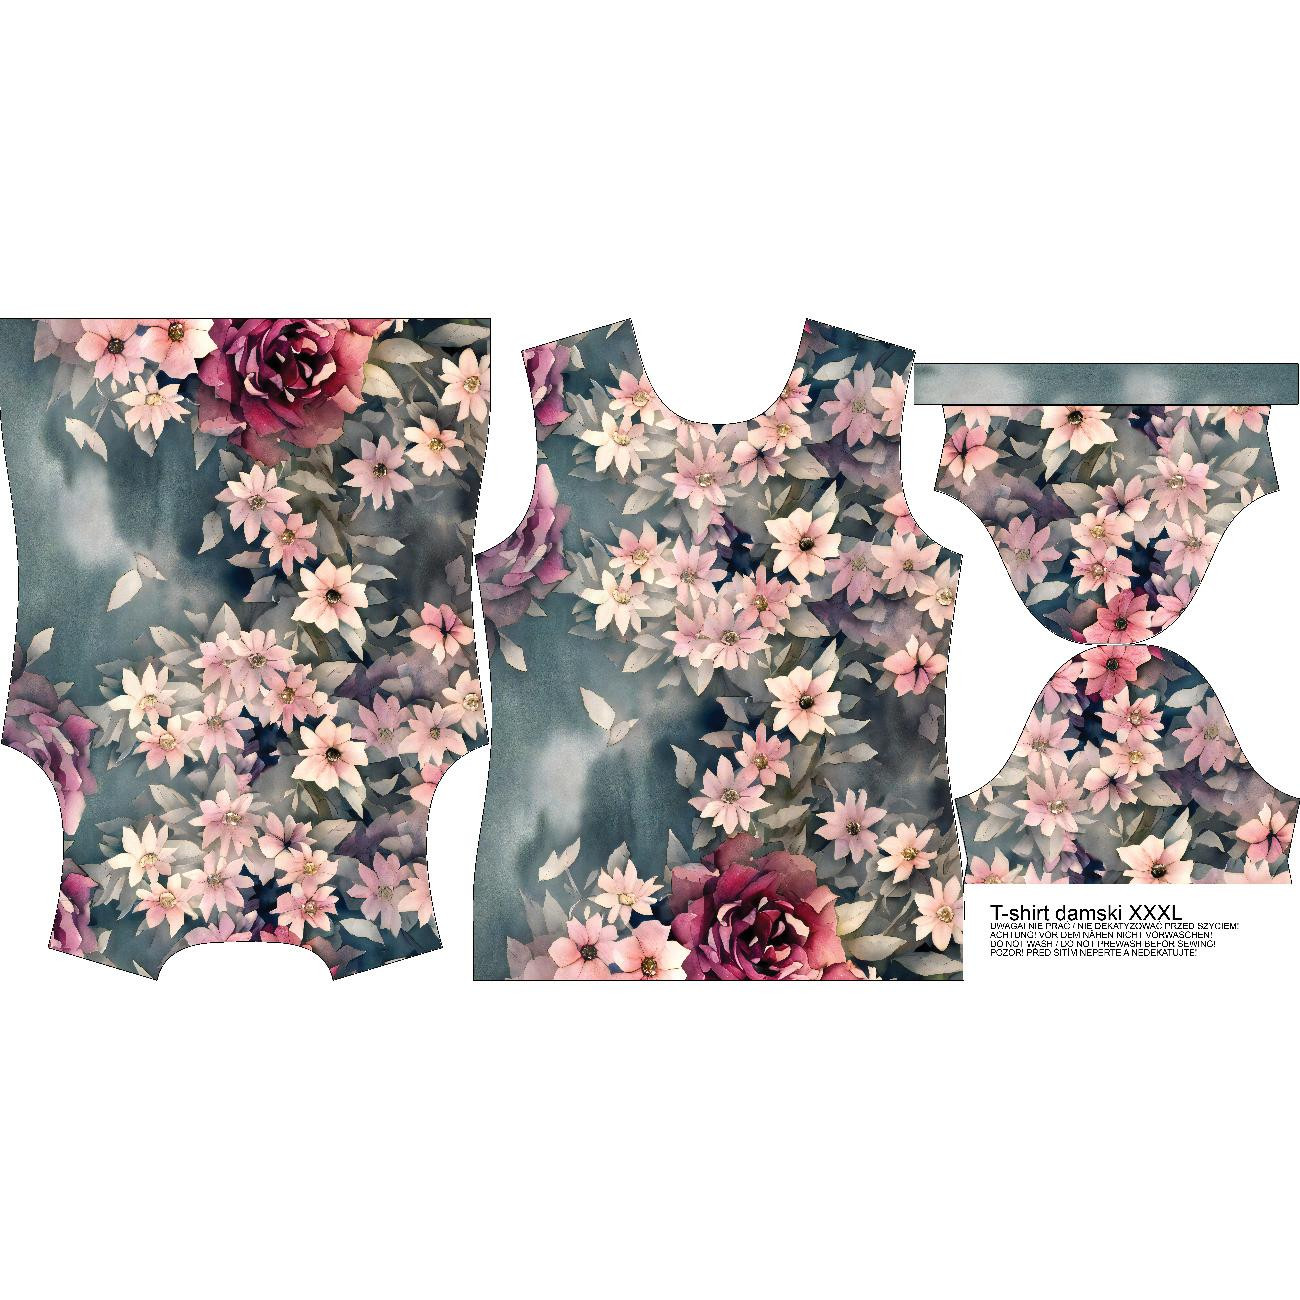 WOMEN’S T-SHIRT - VINTAGE FLOWERS pat. 1 - sewing set